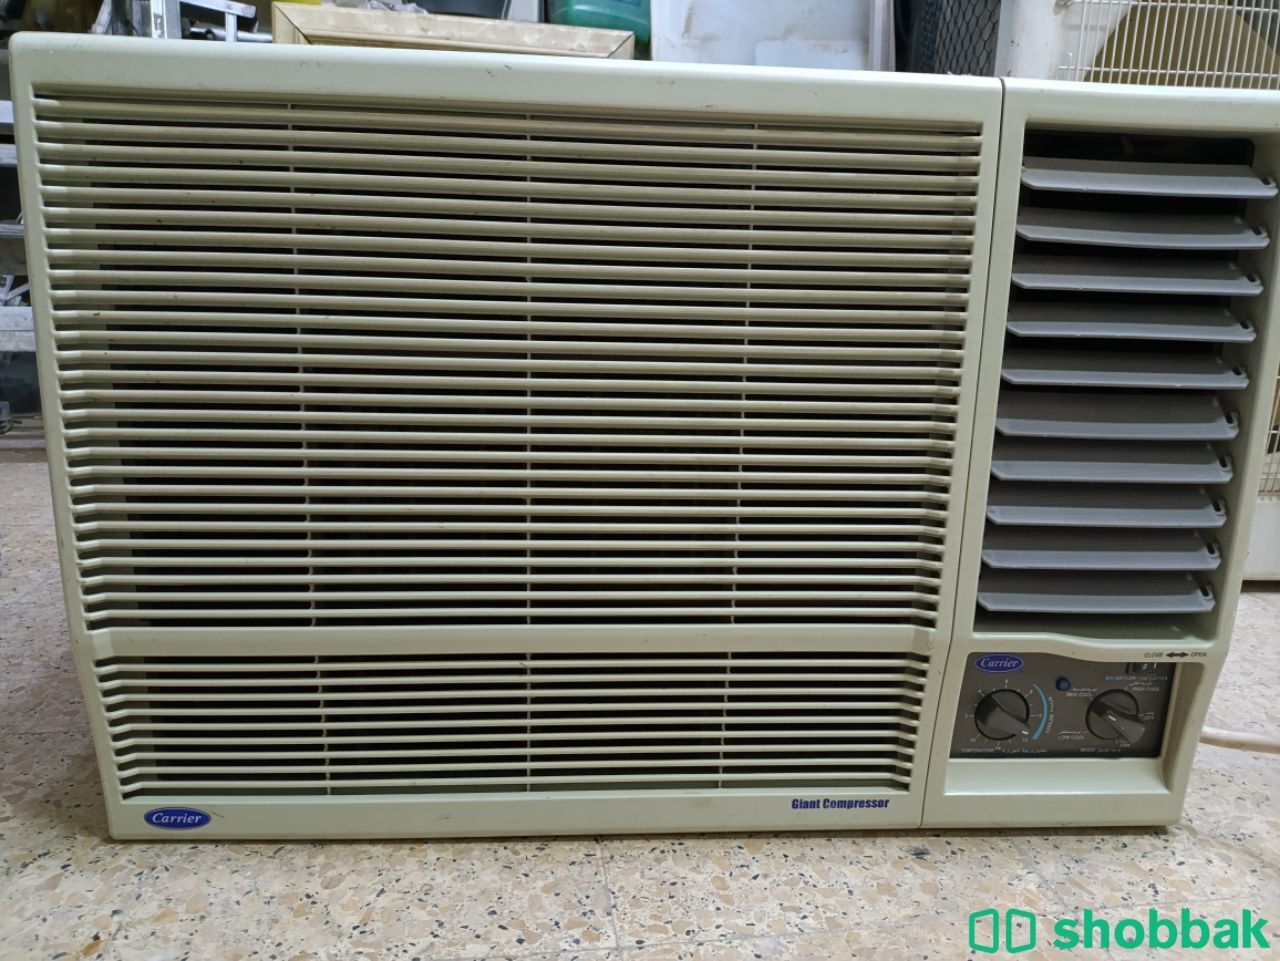 Window Room Air Conditioner
R-22 Refrigerant Shobbak Saudi Arabia